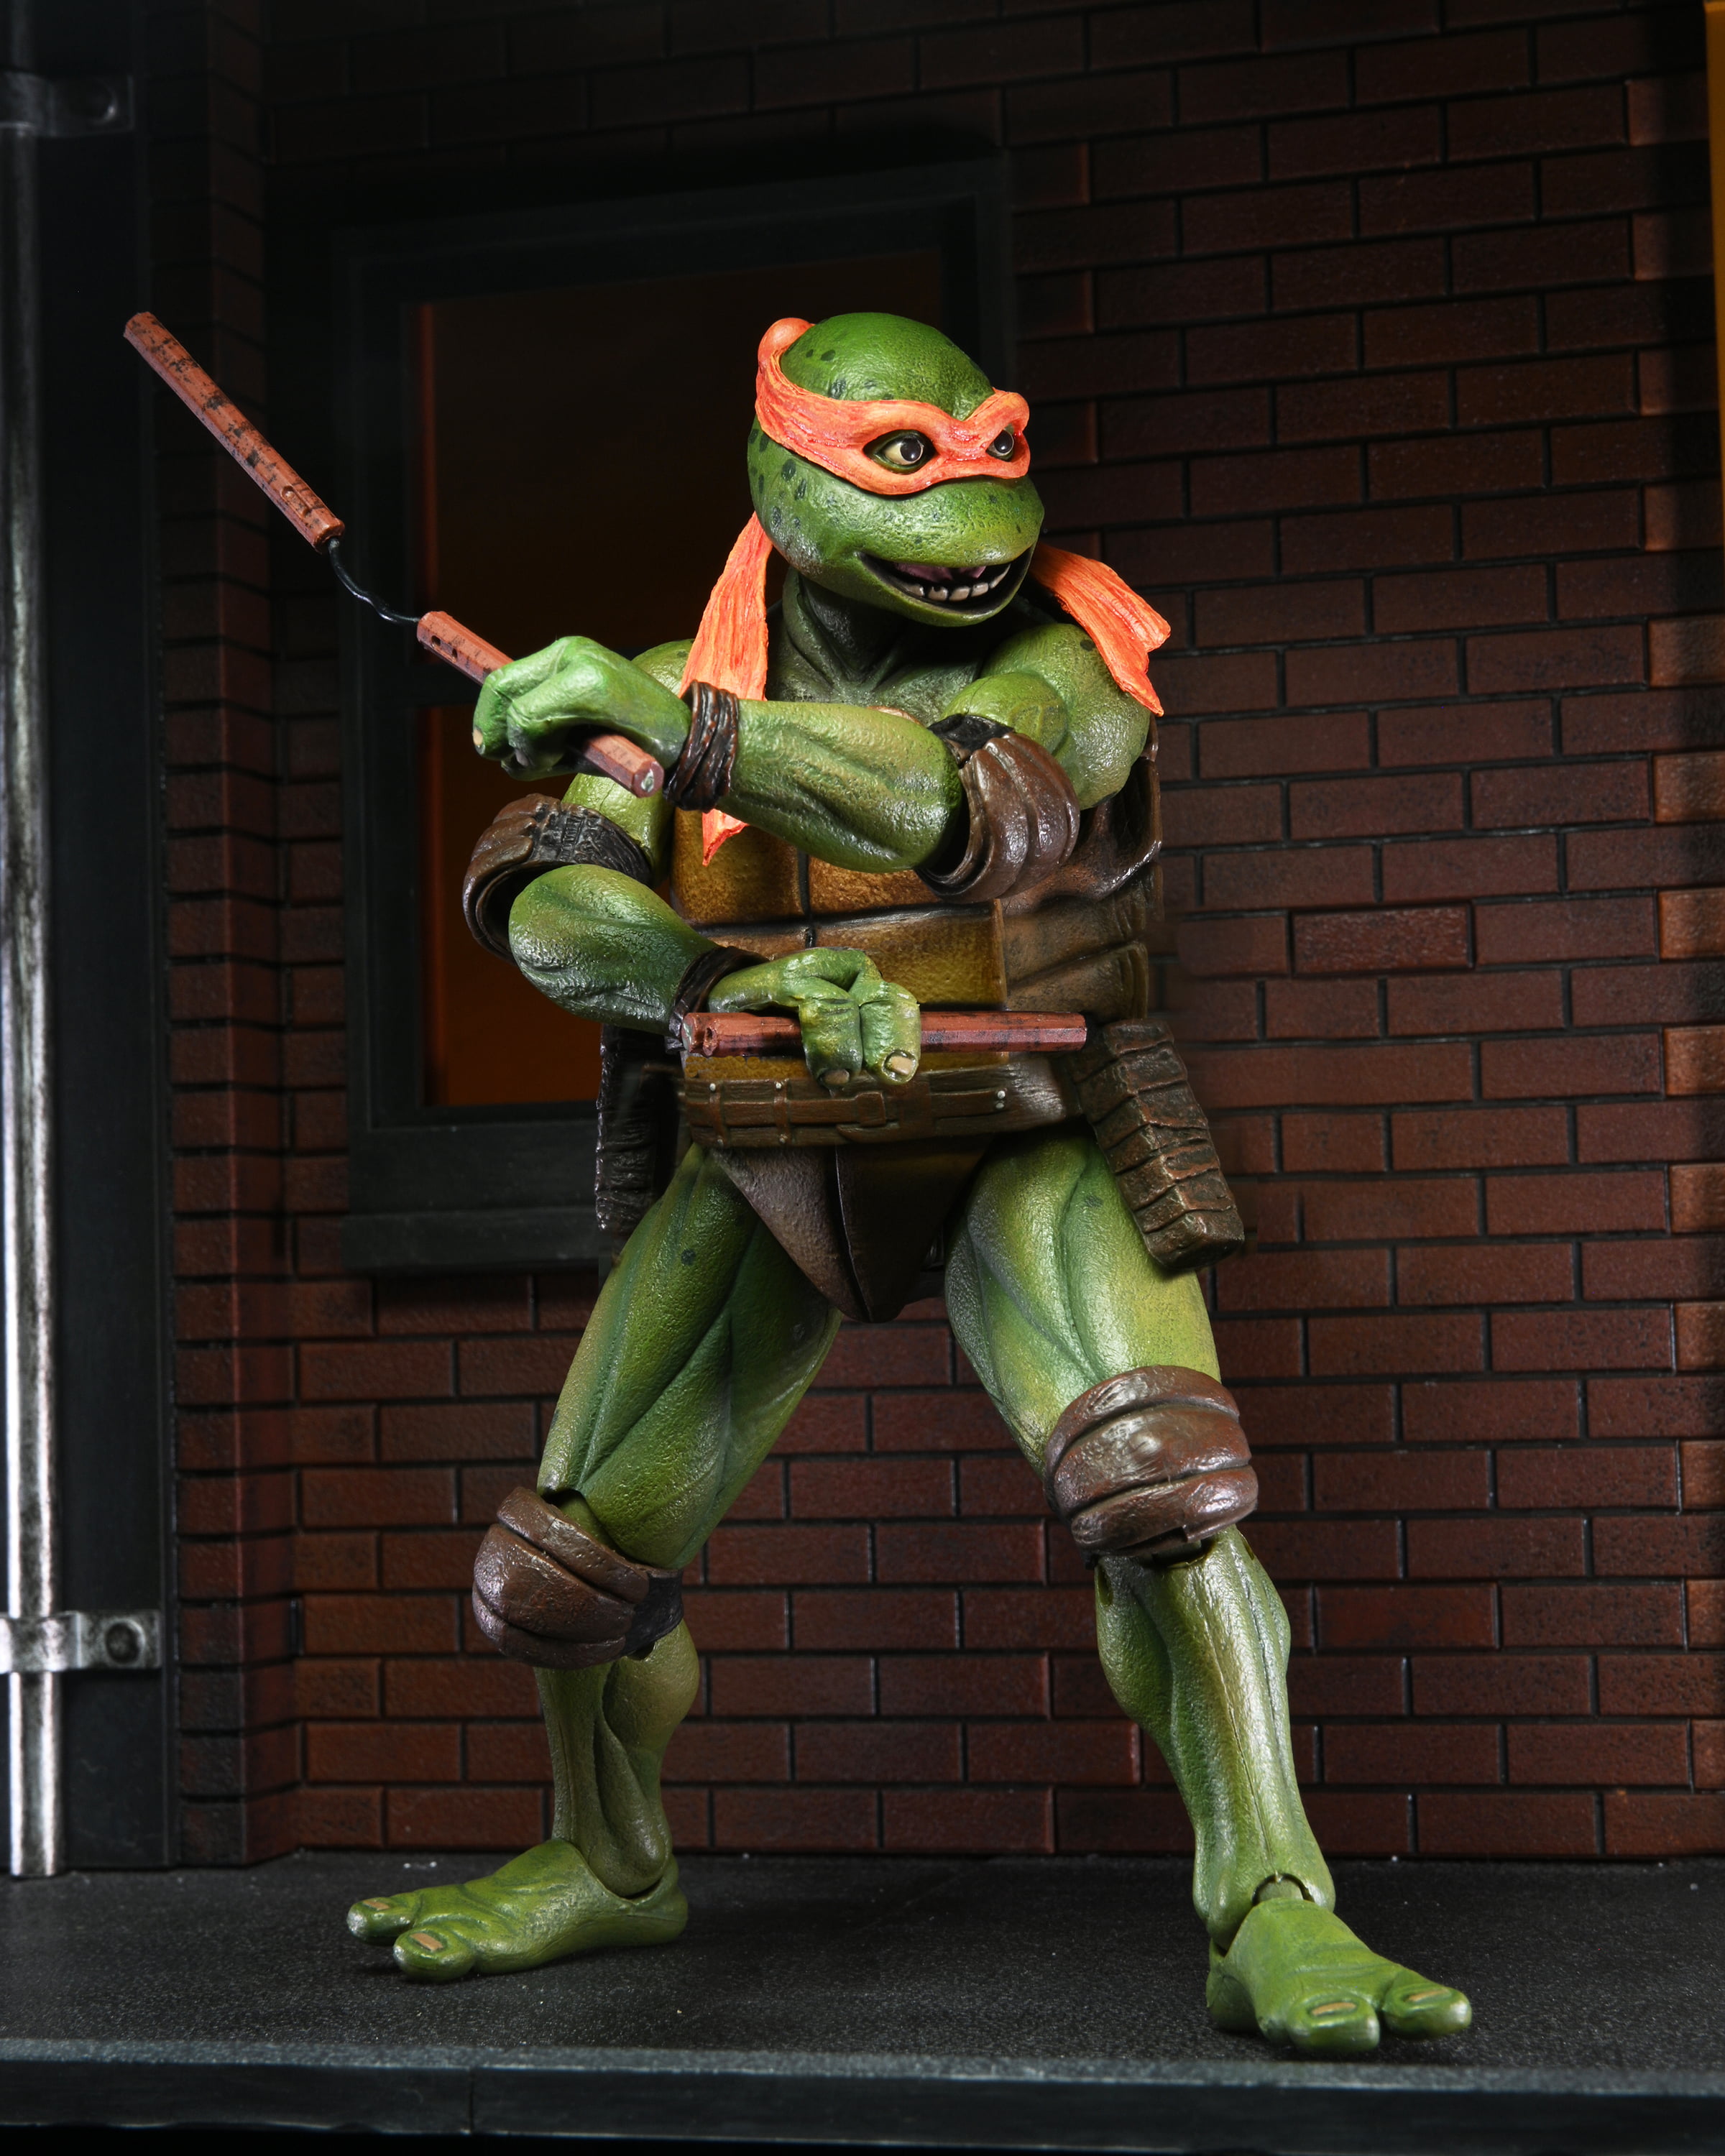 Teenage Mutant Ninja Turtles 2: Secret of the Ooze – 7” Scale Action Figure  – Donatello & Michelangelo 2 Pack